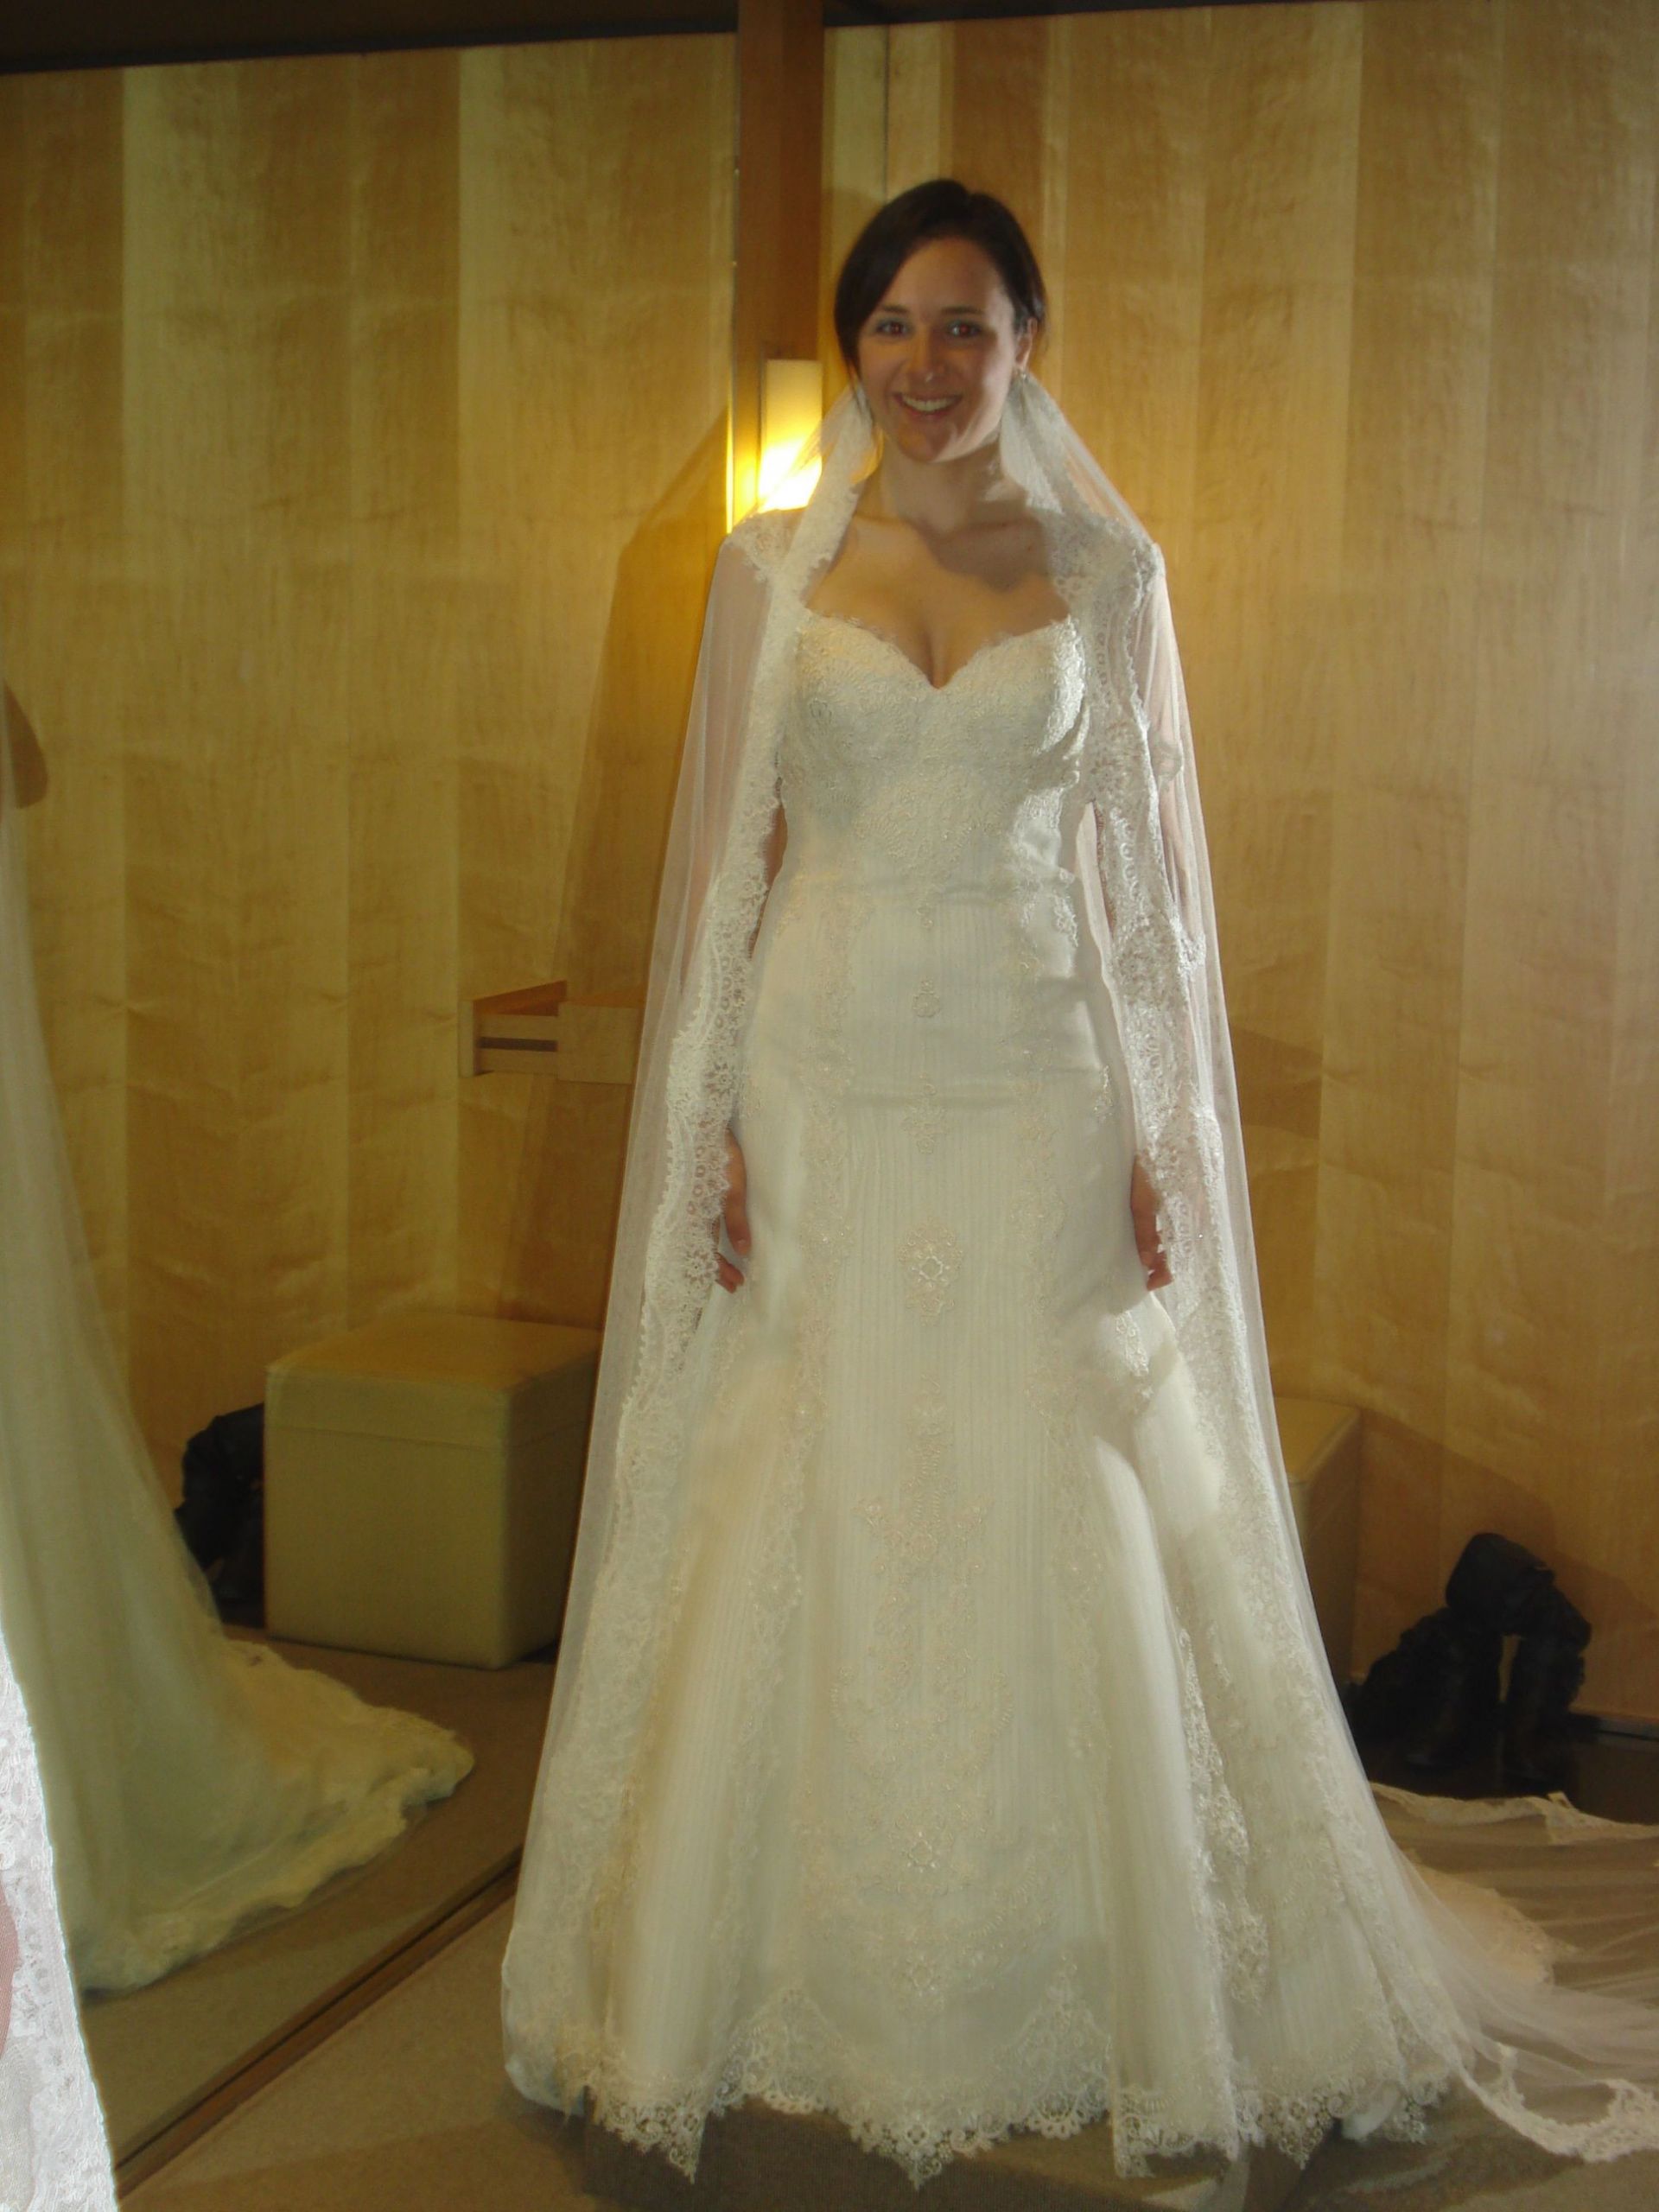 My Wedding Dress
 Buying My Wedding Dress in Spain